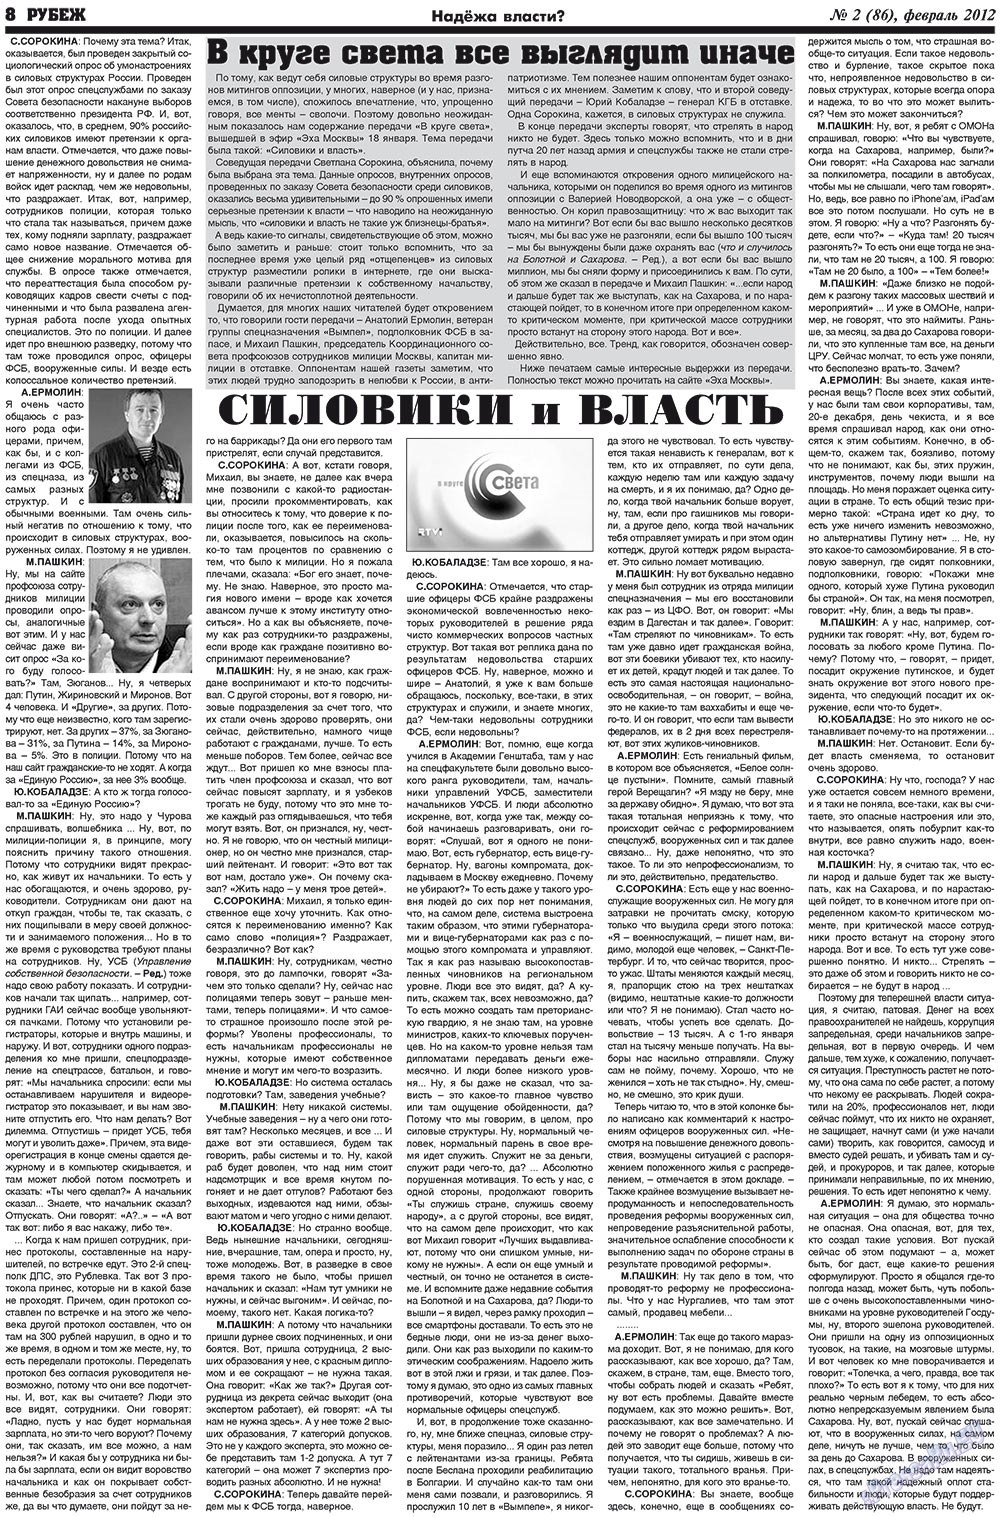 Рубеж, газета. 2012 №2 стр.8